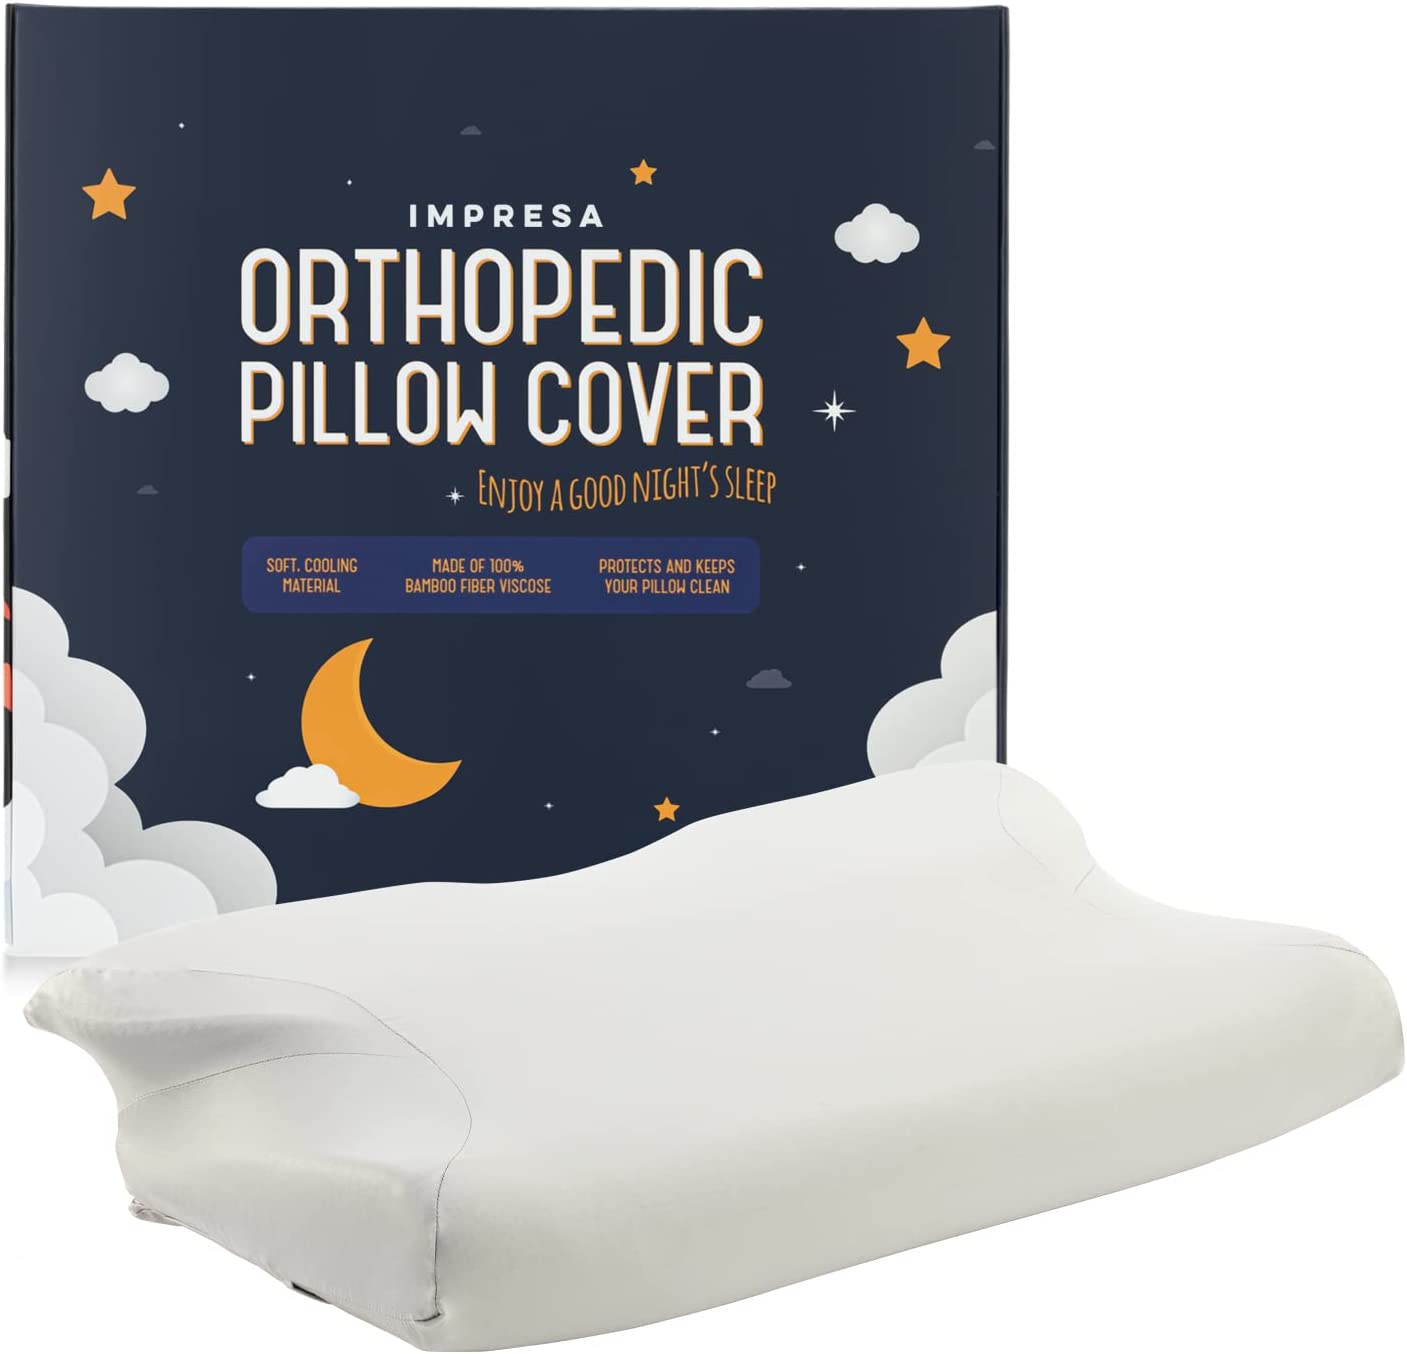 Sutera: Orthopedic Knee Pillow